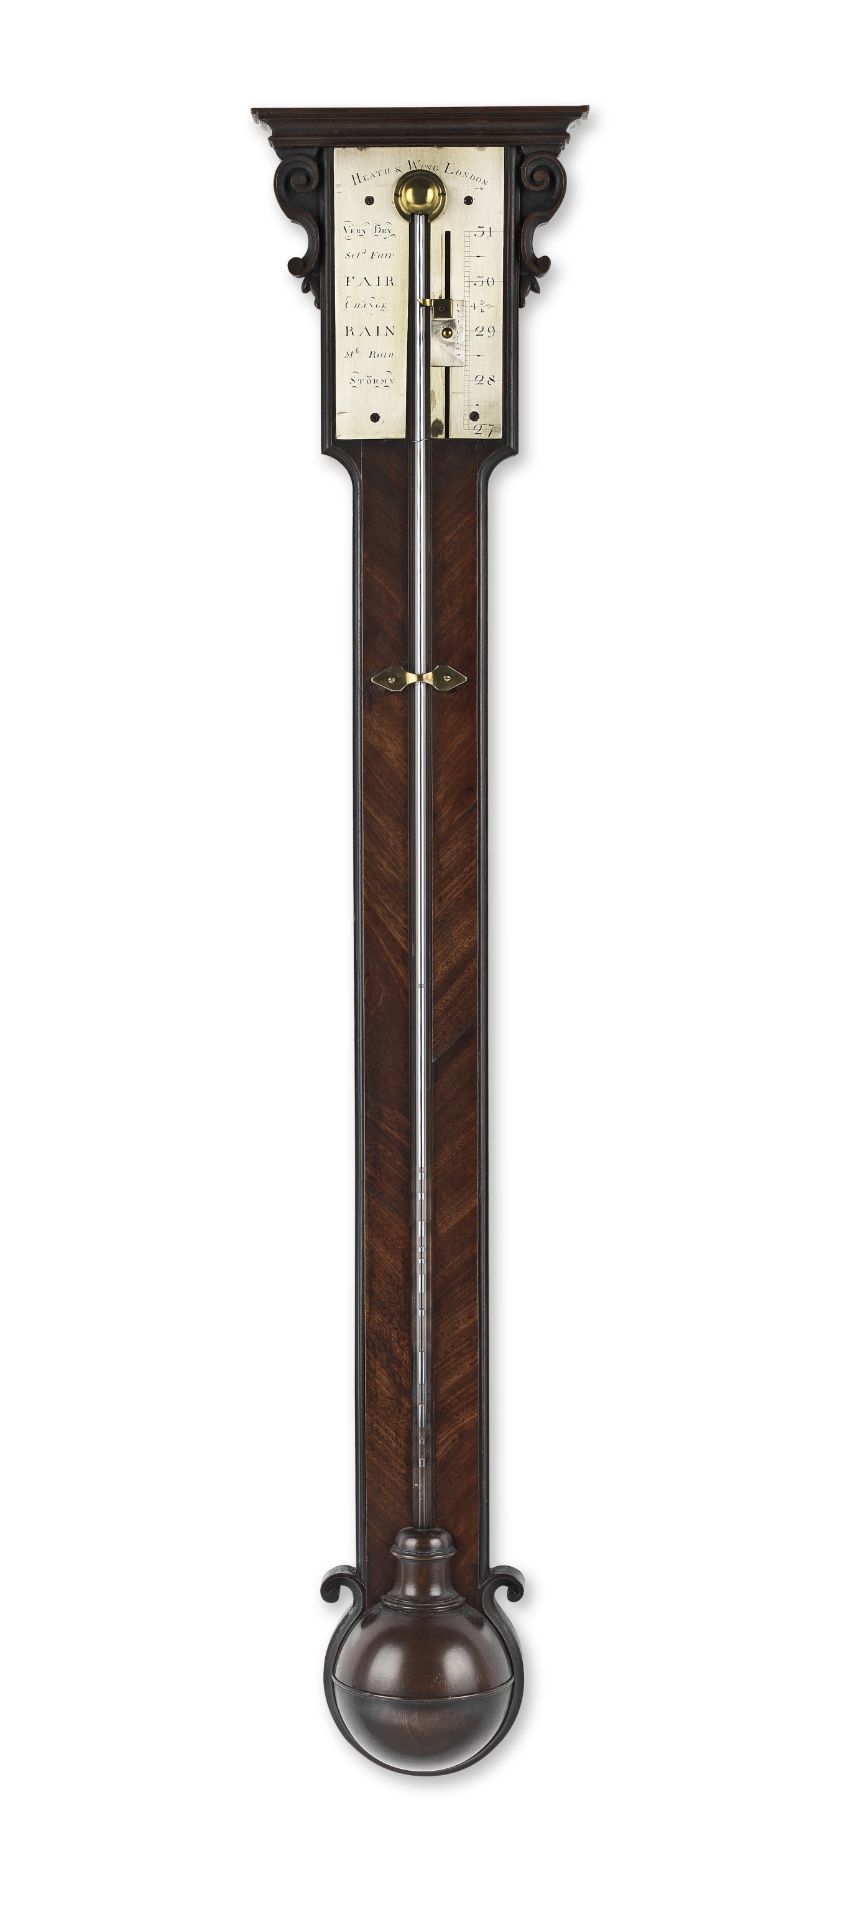 A rare mid 18th century mahogany stick barometer signed Heath & Wing, London